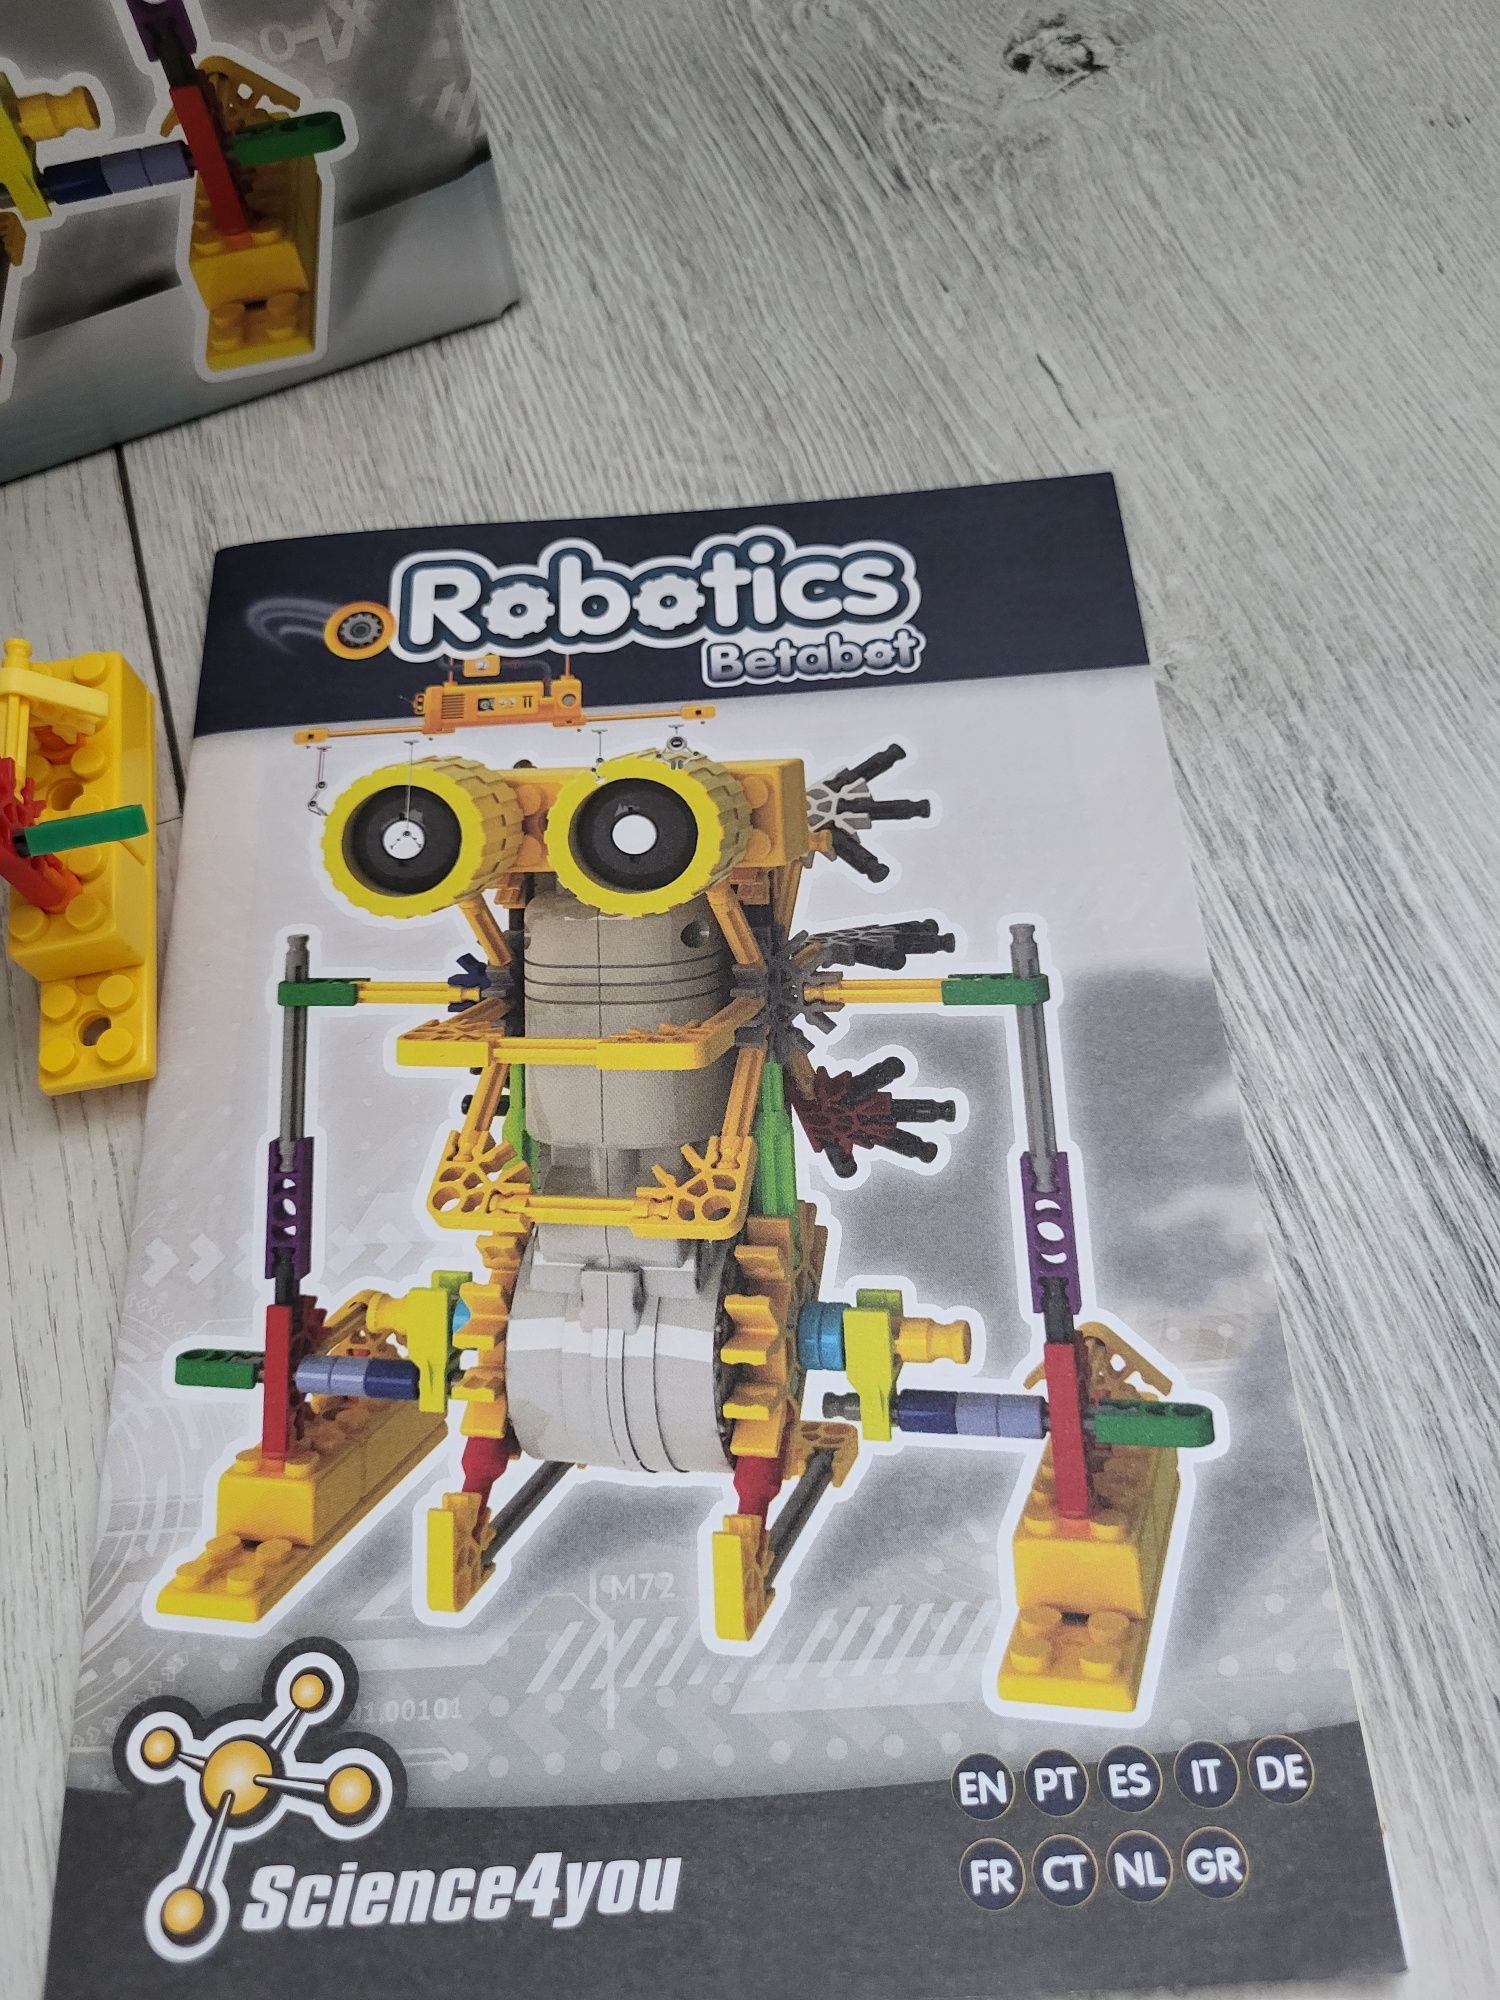 Robotics betabot science4you stan idealny zabawka robotyka